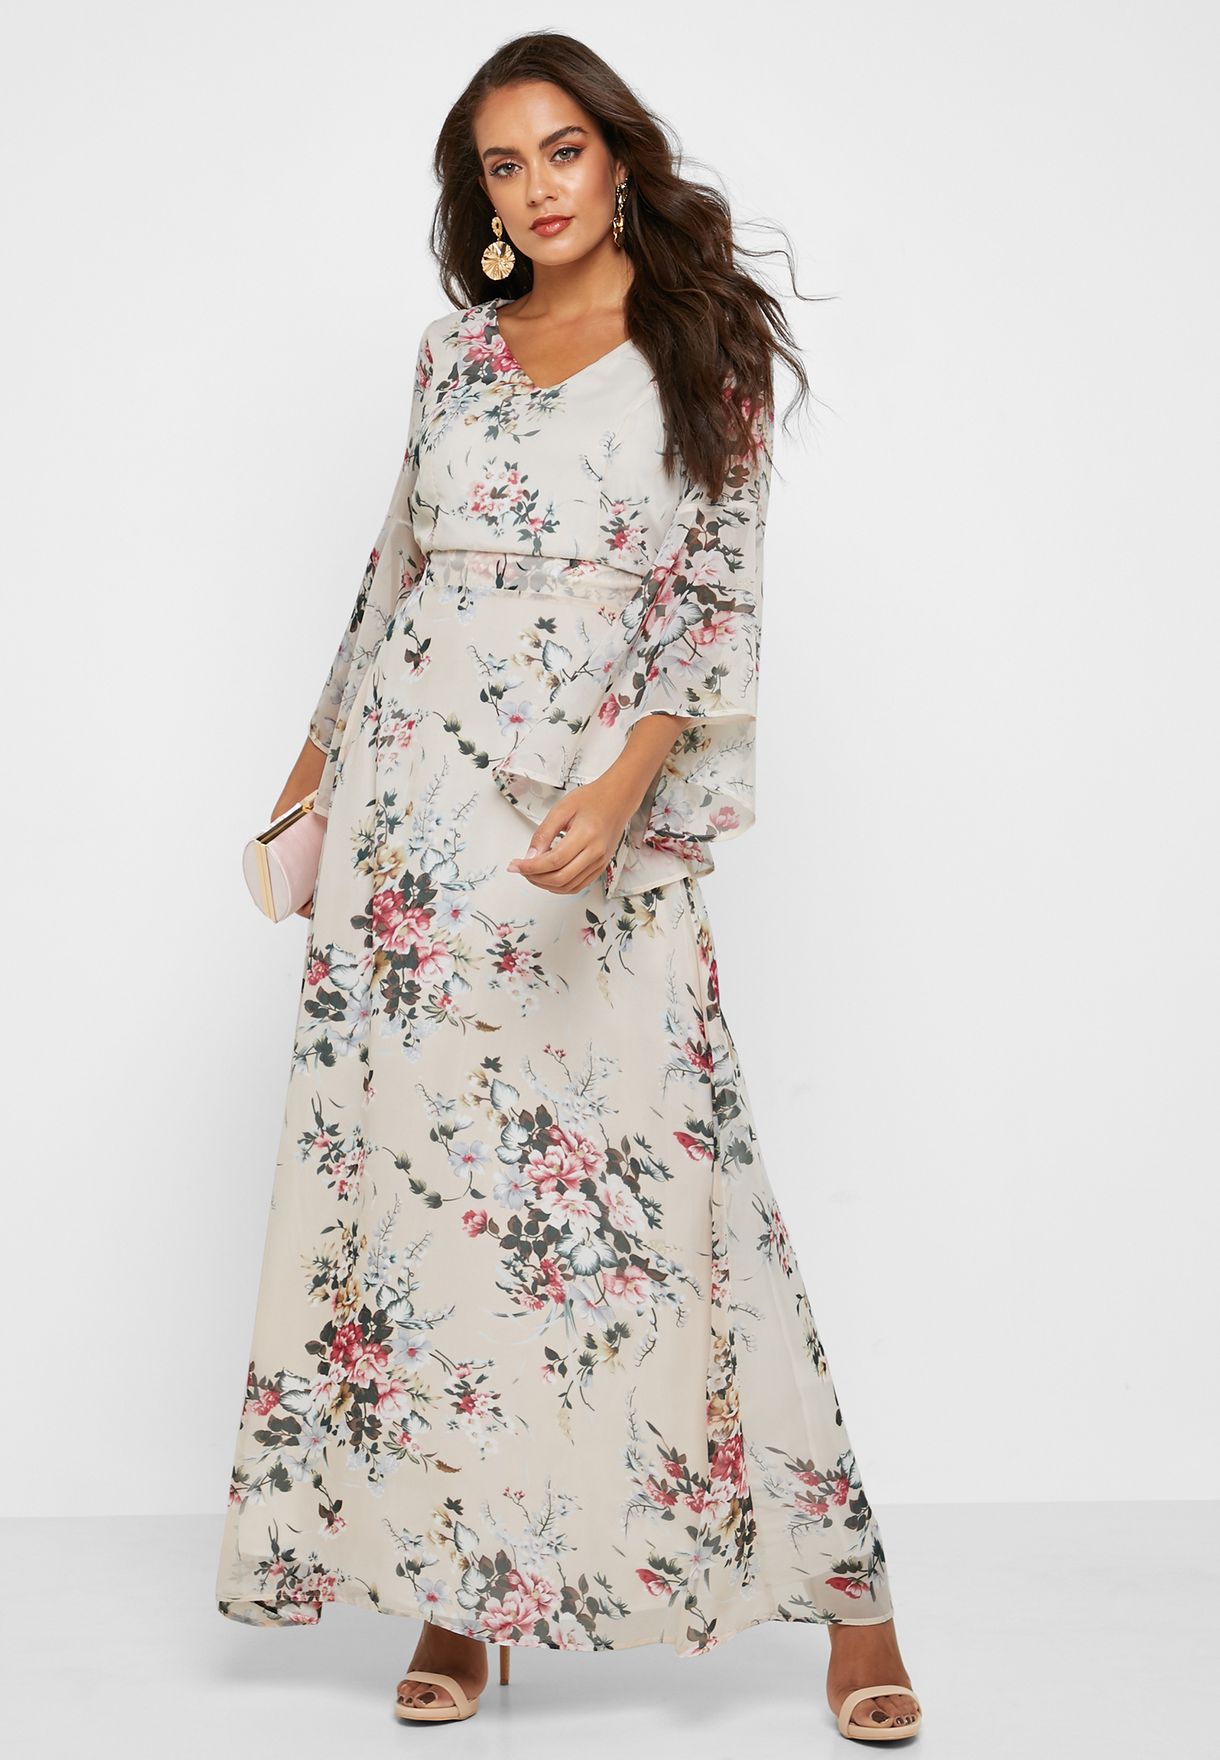 mela london floral dress